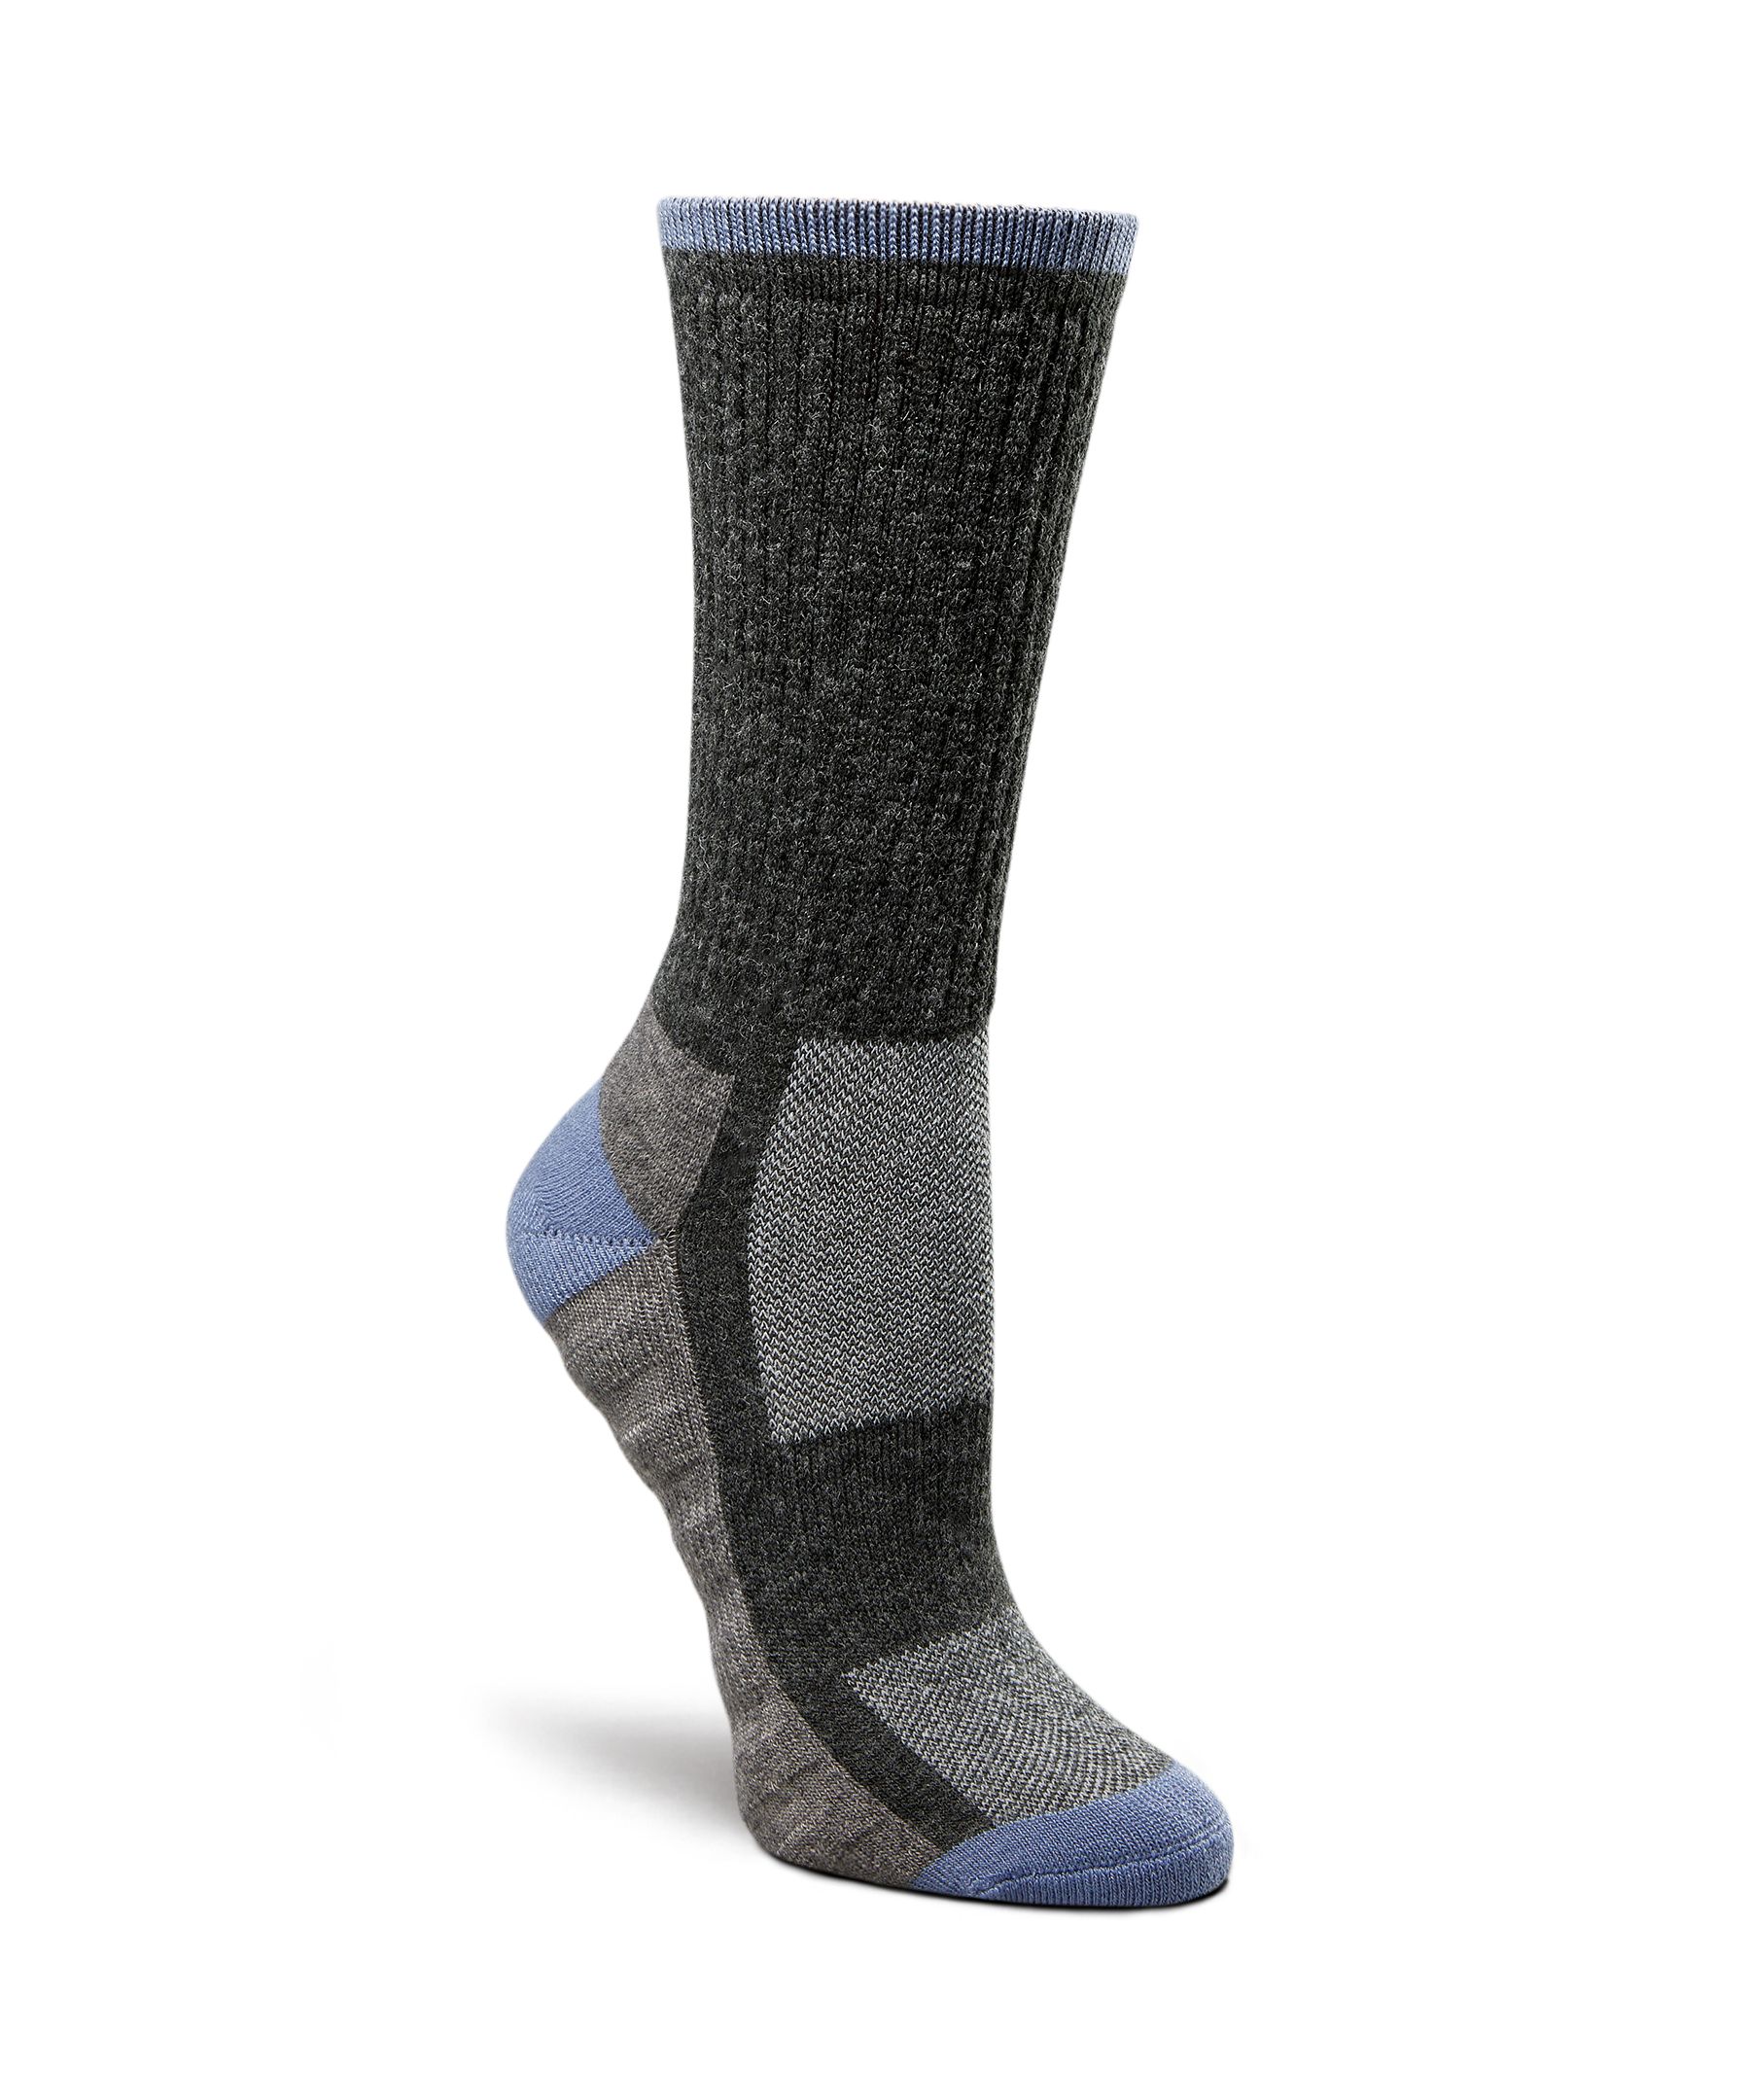 FUN TOES Men Merino Wool Hiking Socks -Lightweight-6 Pairs Pack Green